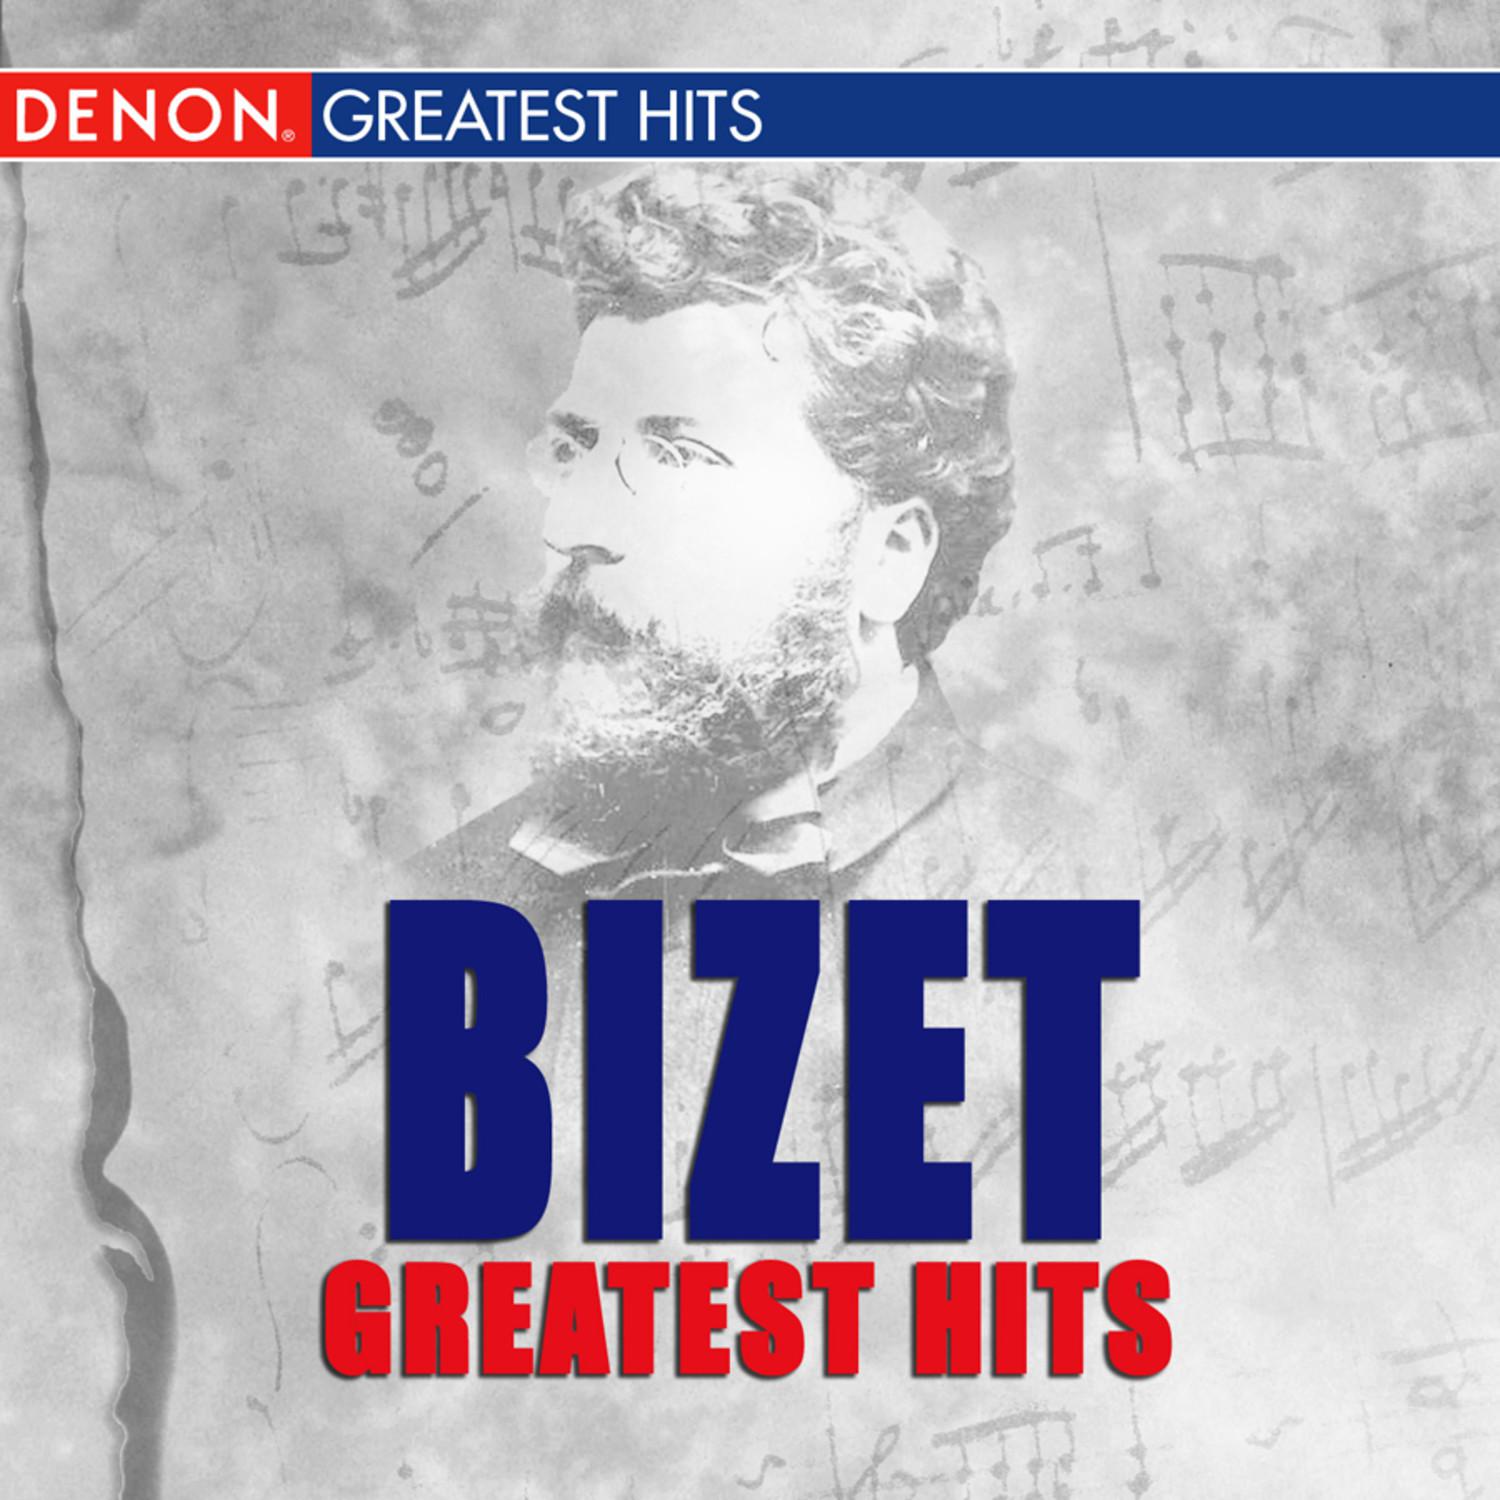 Bizet Greatest Hits